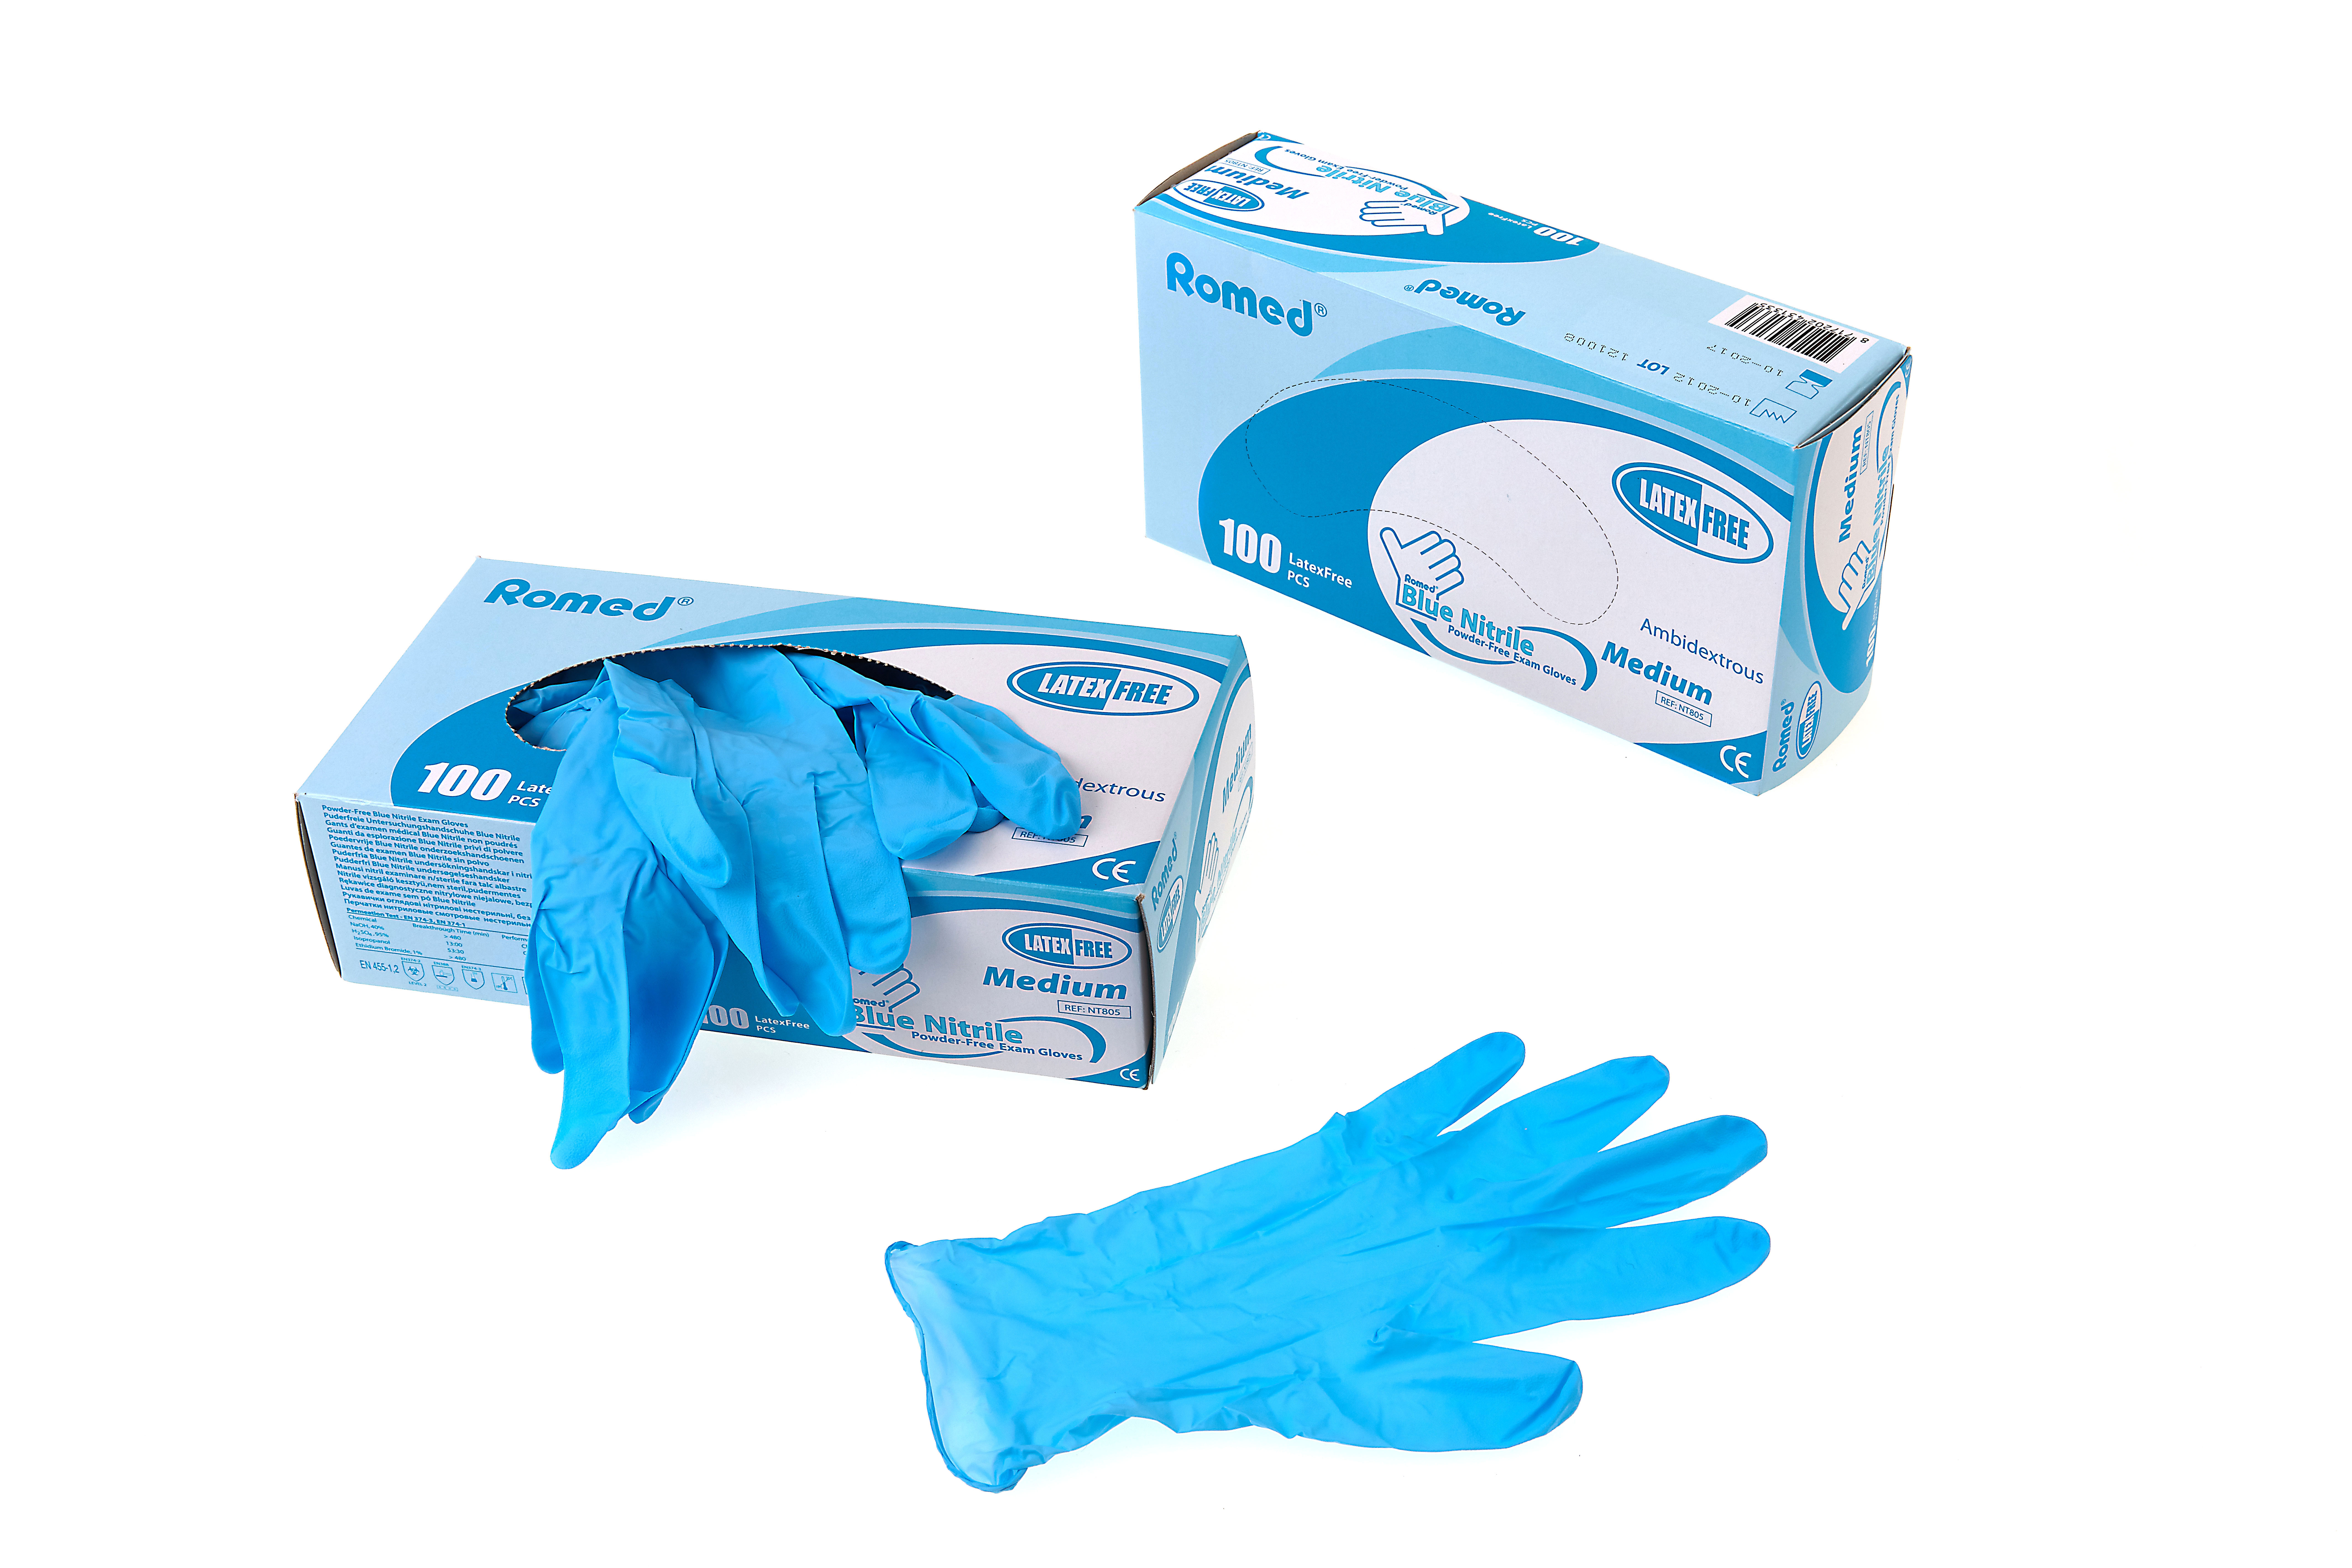 NT800 Romed nitrile examination gloves+, non sterile, powderfree, blue, small, per 100 pcs in a dispenser box, 10 x 100 pcs = 1.000 pcs in a carton.